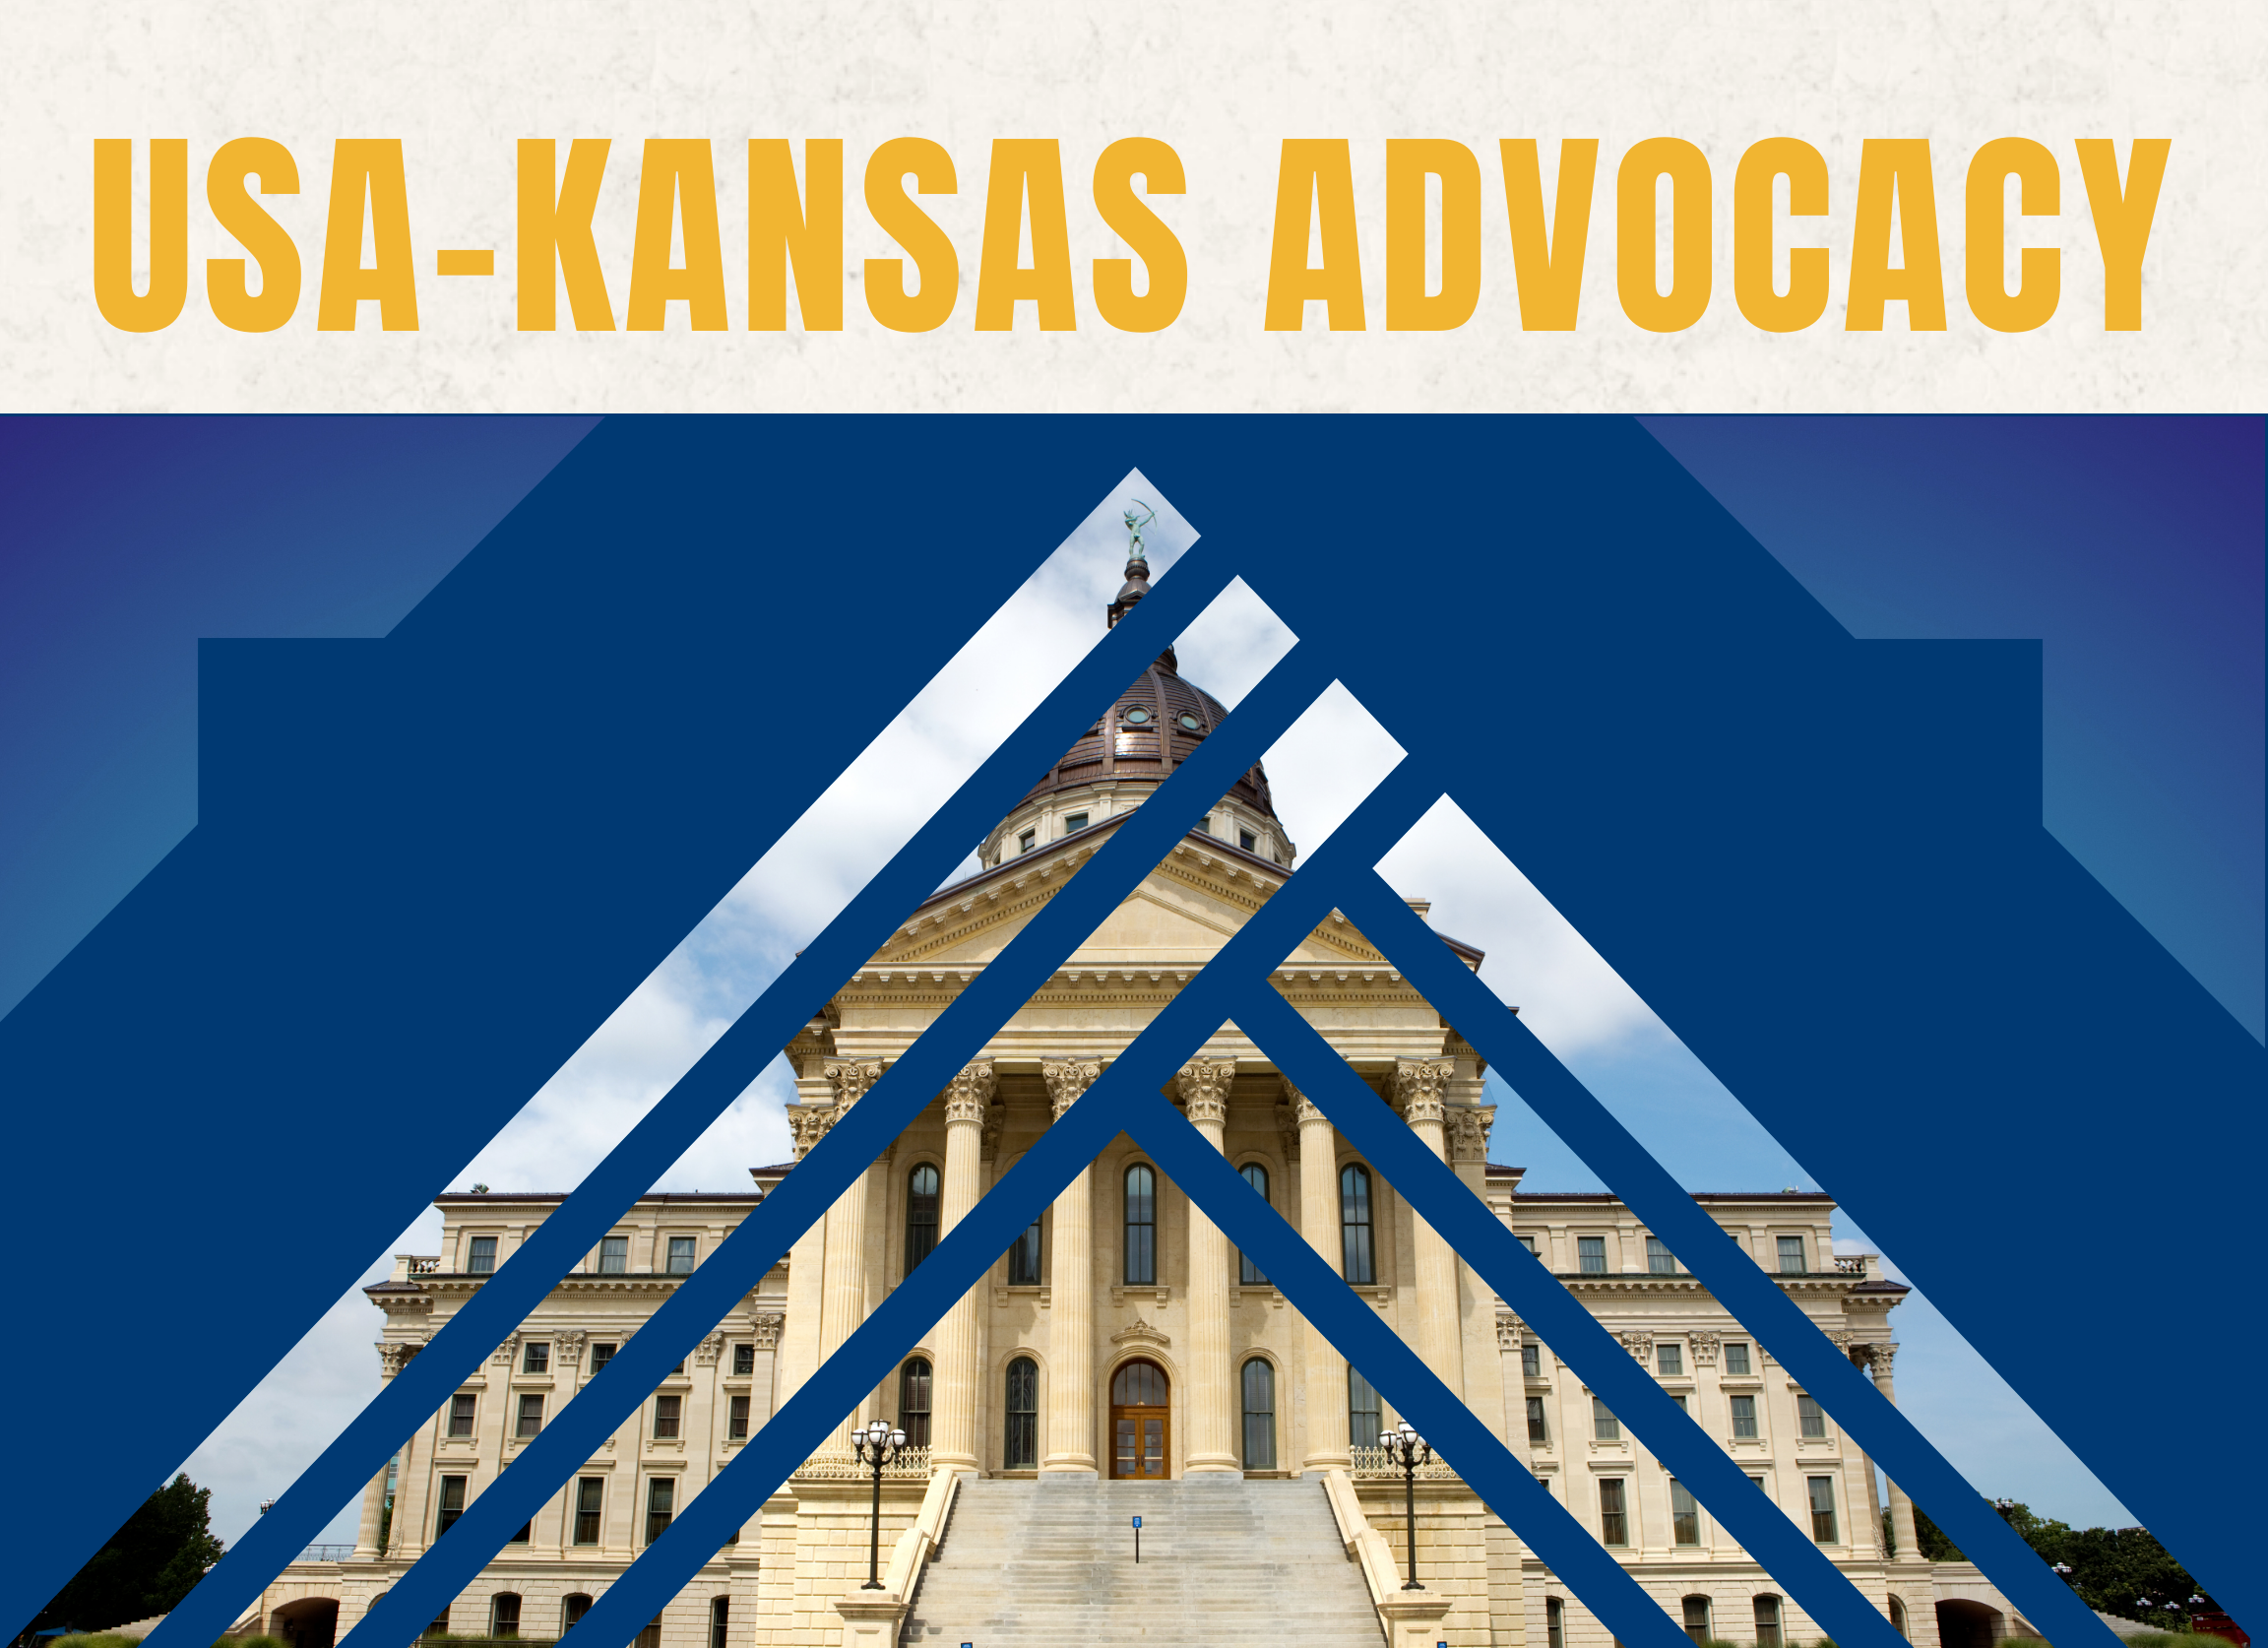 USA-Kansas Advocacy, Kansas state capitol